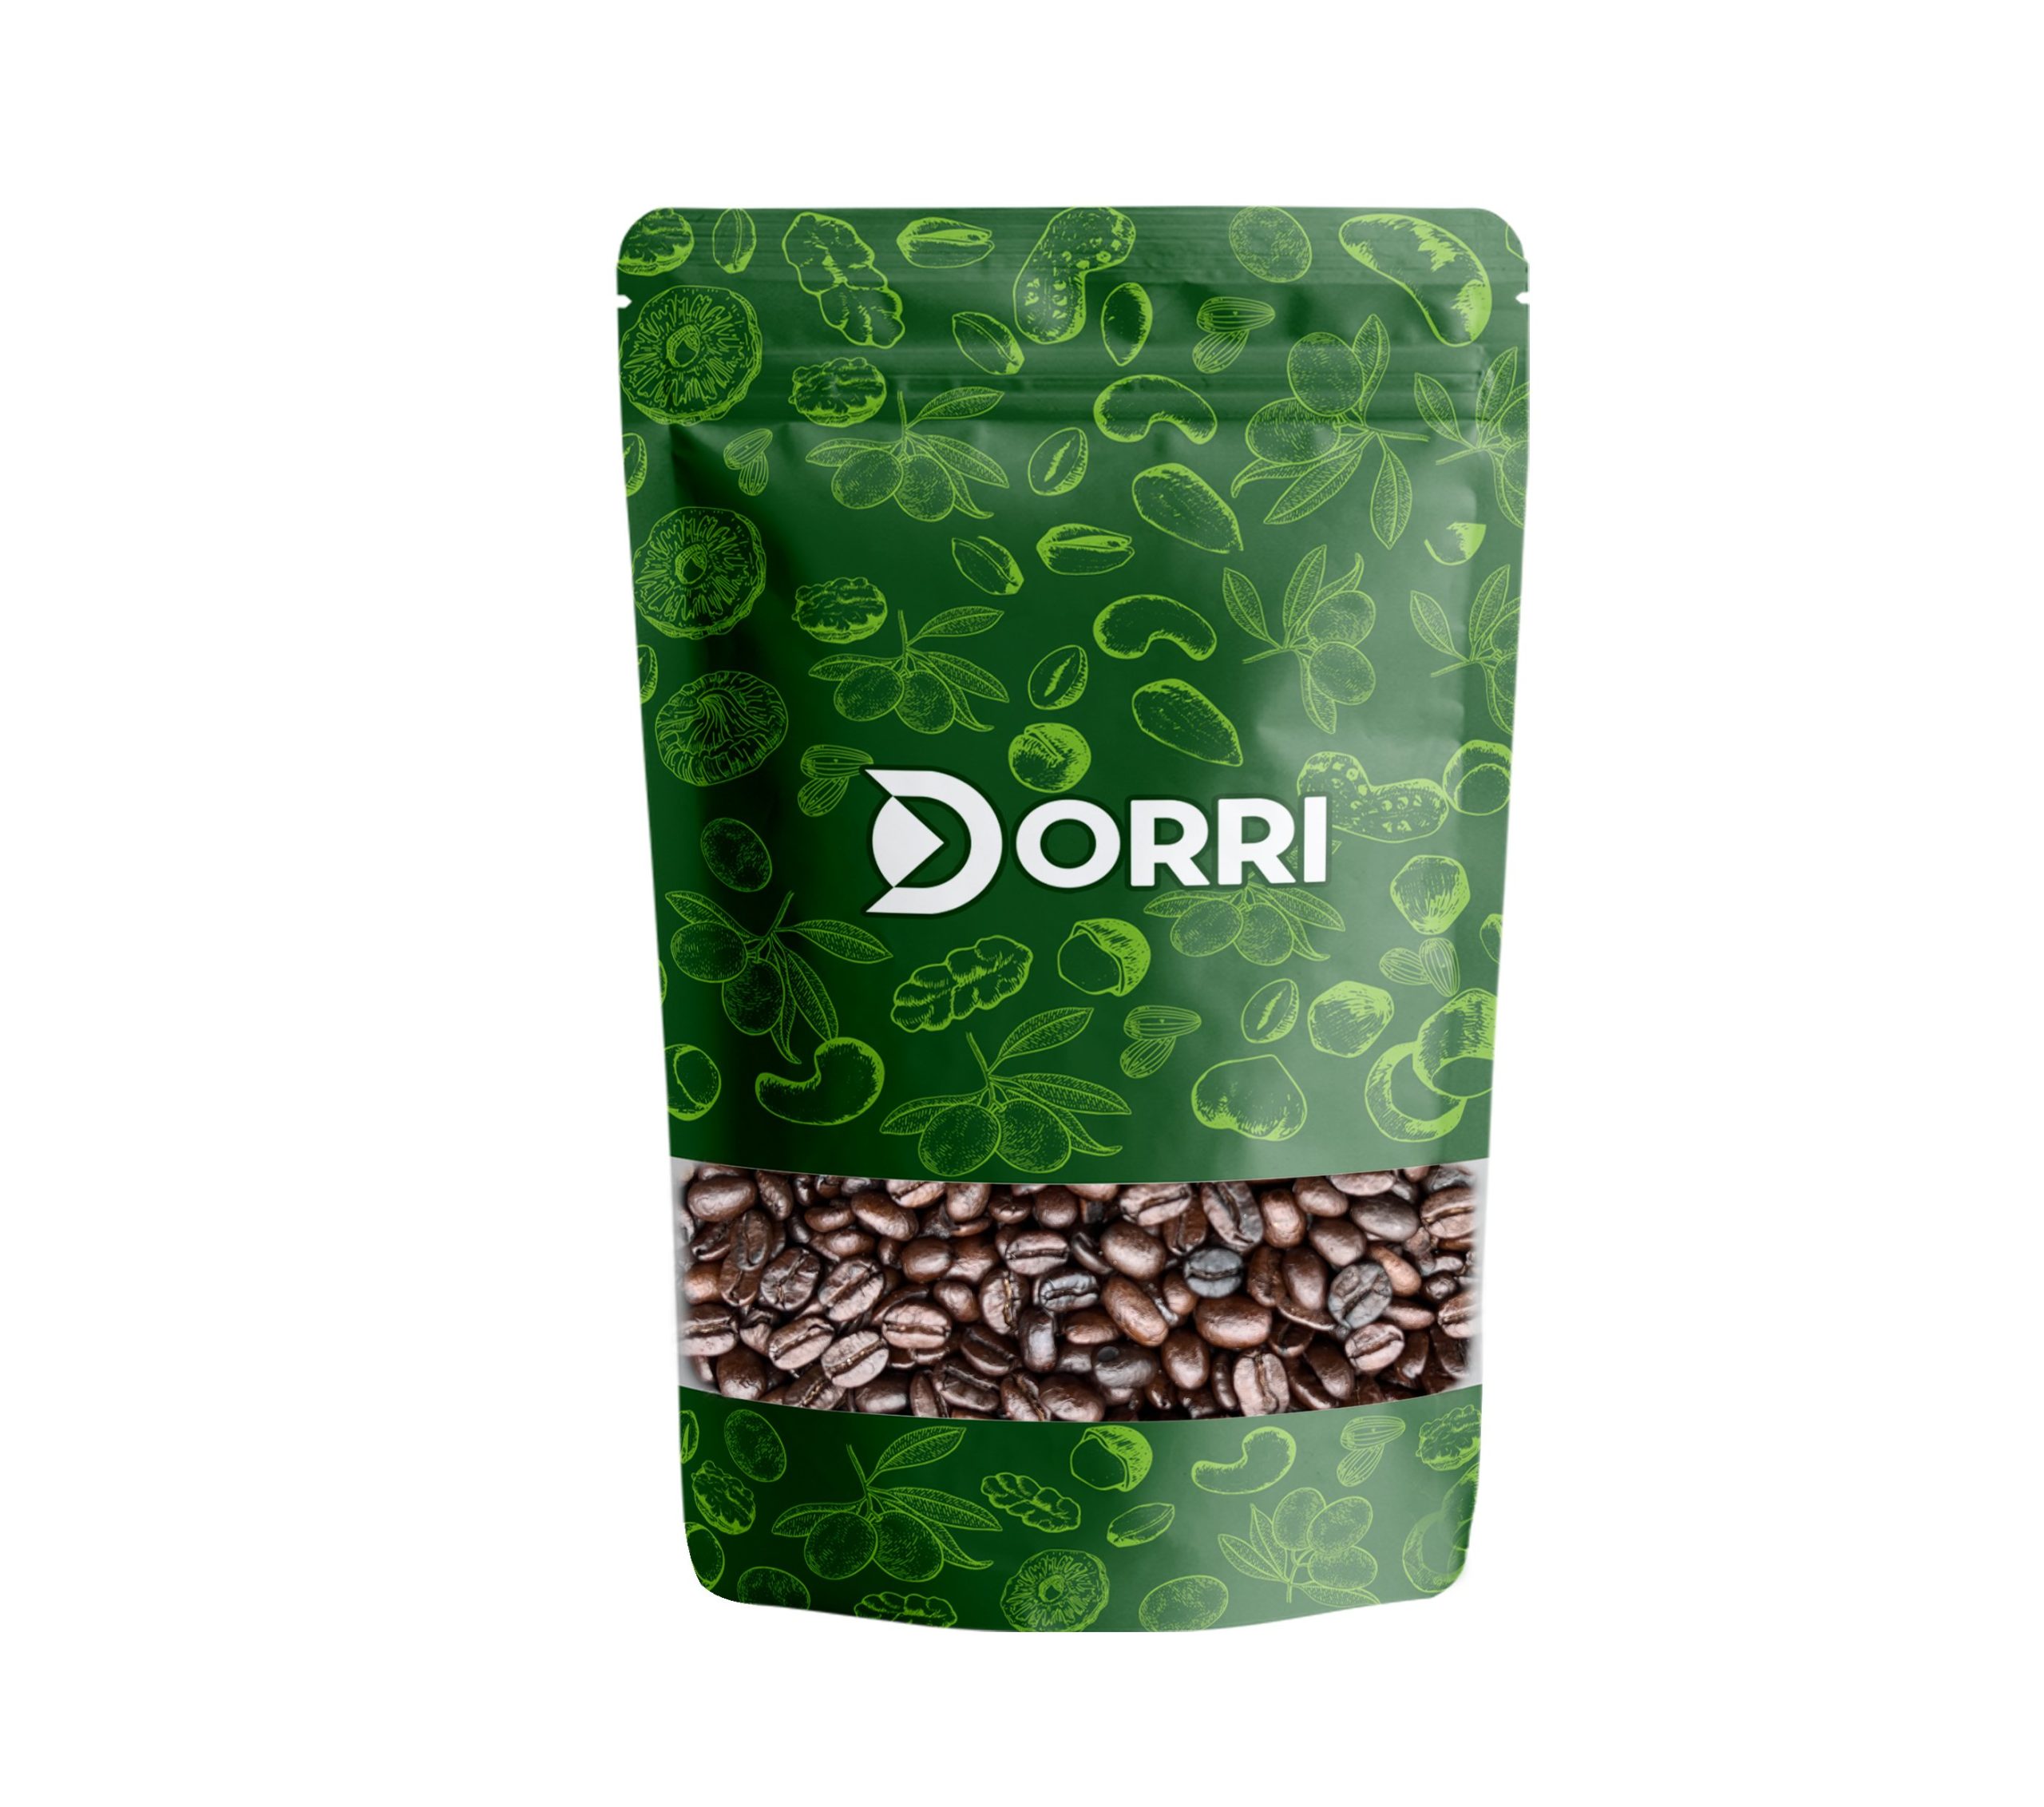 Dorri - Deluxe Organic Coffee